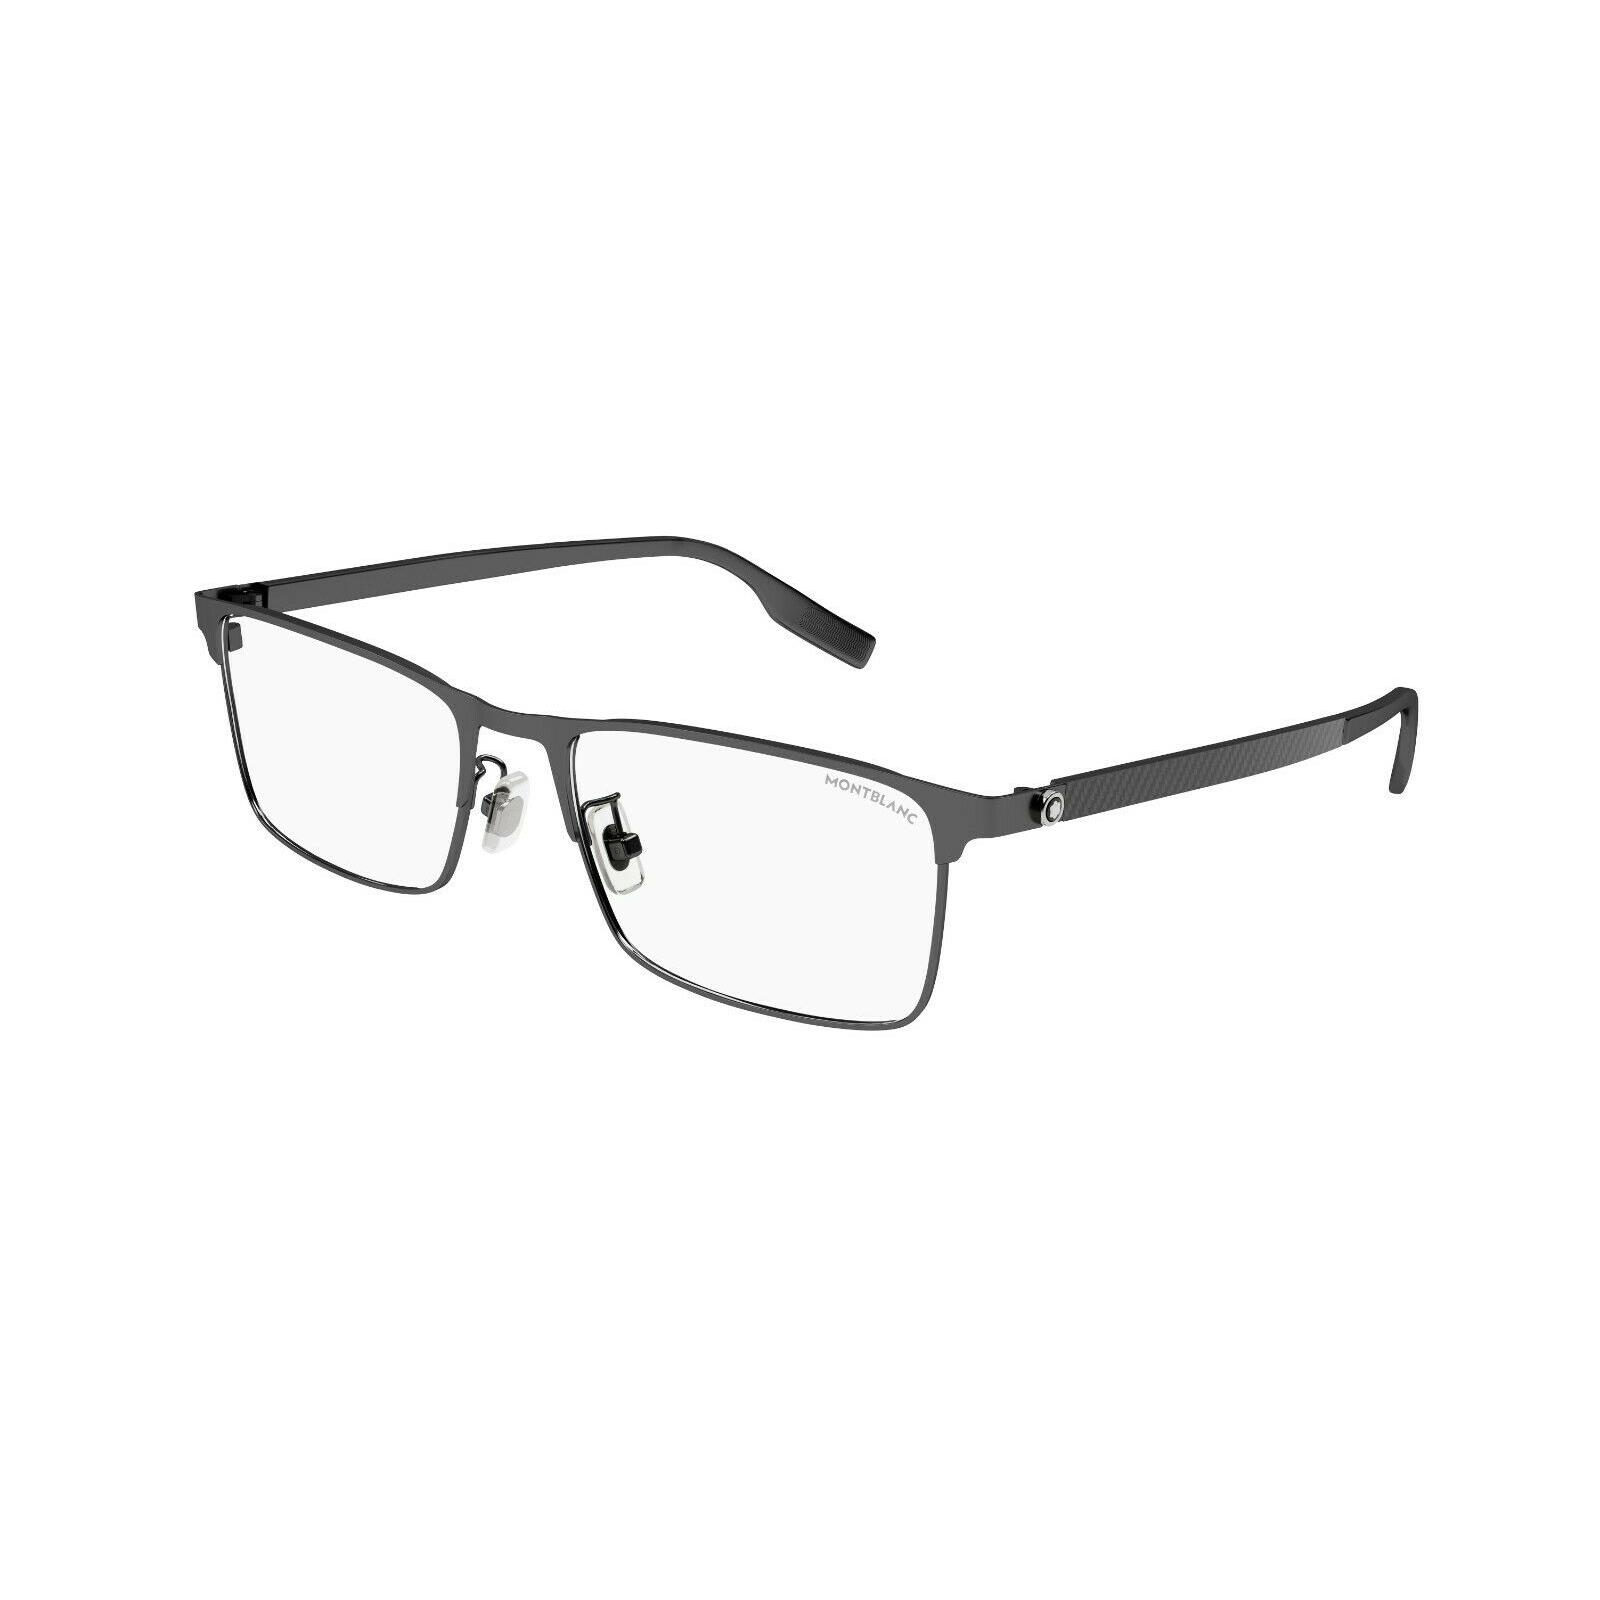 Montblanc Mont Blanc Eyeglasses MB0187o-004 Black Frame Clear Lenses